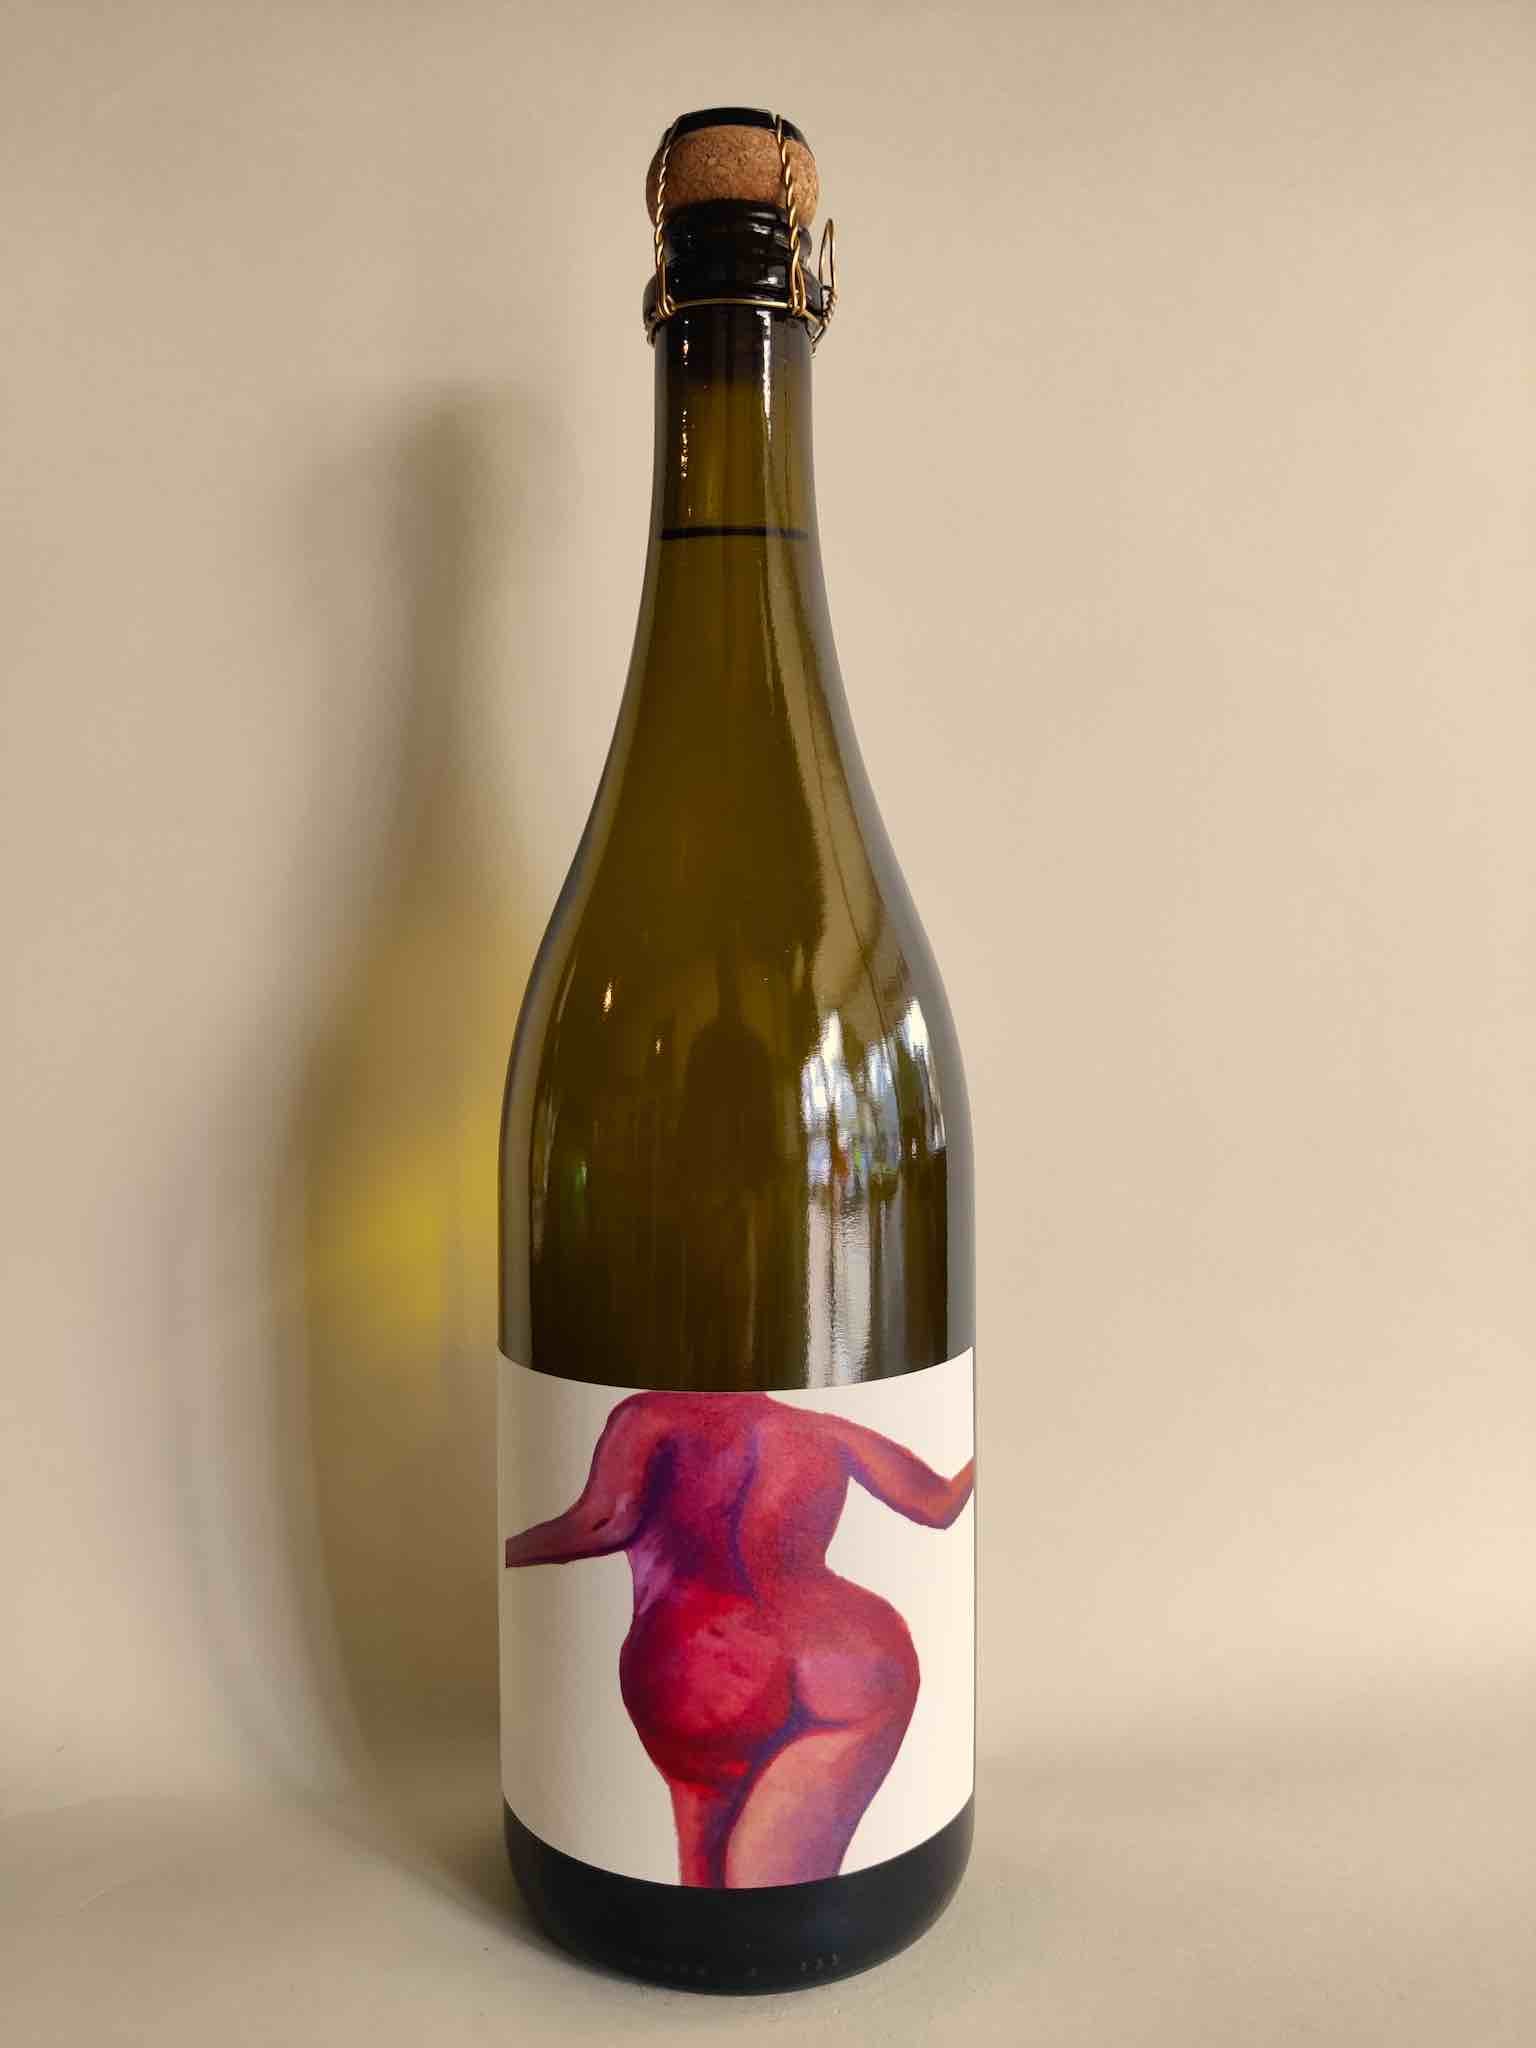 A bottle of Moondarra Cuvee Maree Blanc de Blanc Sparkling Wine from Gippsland, Victoria. 